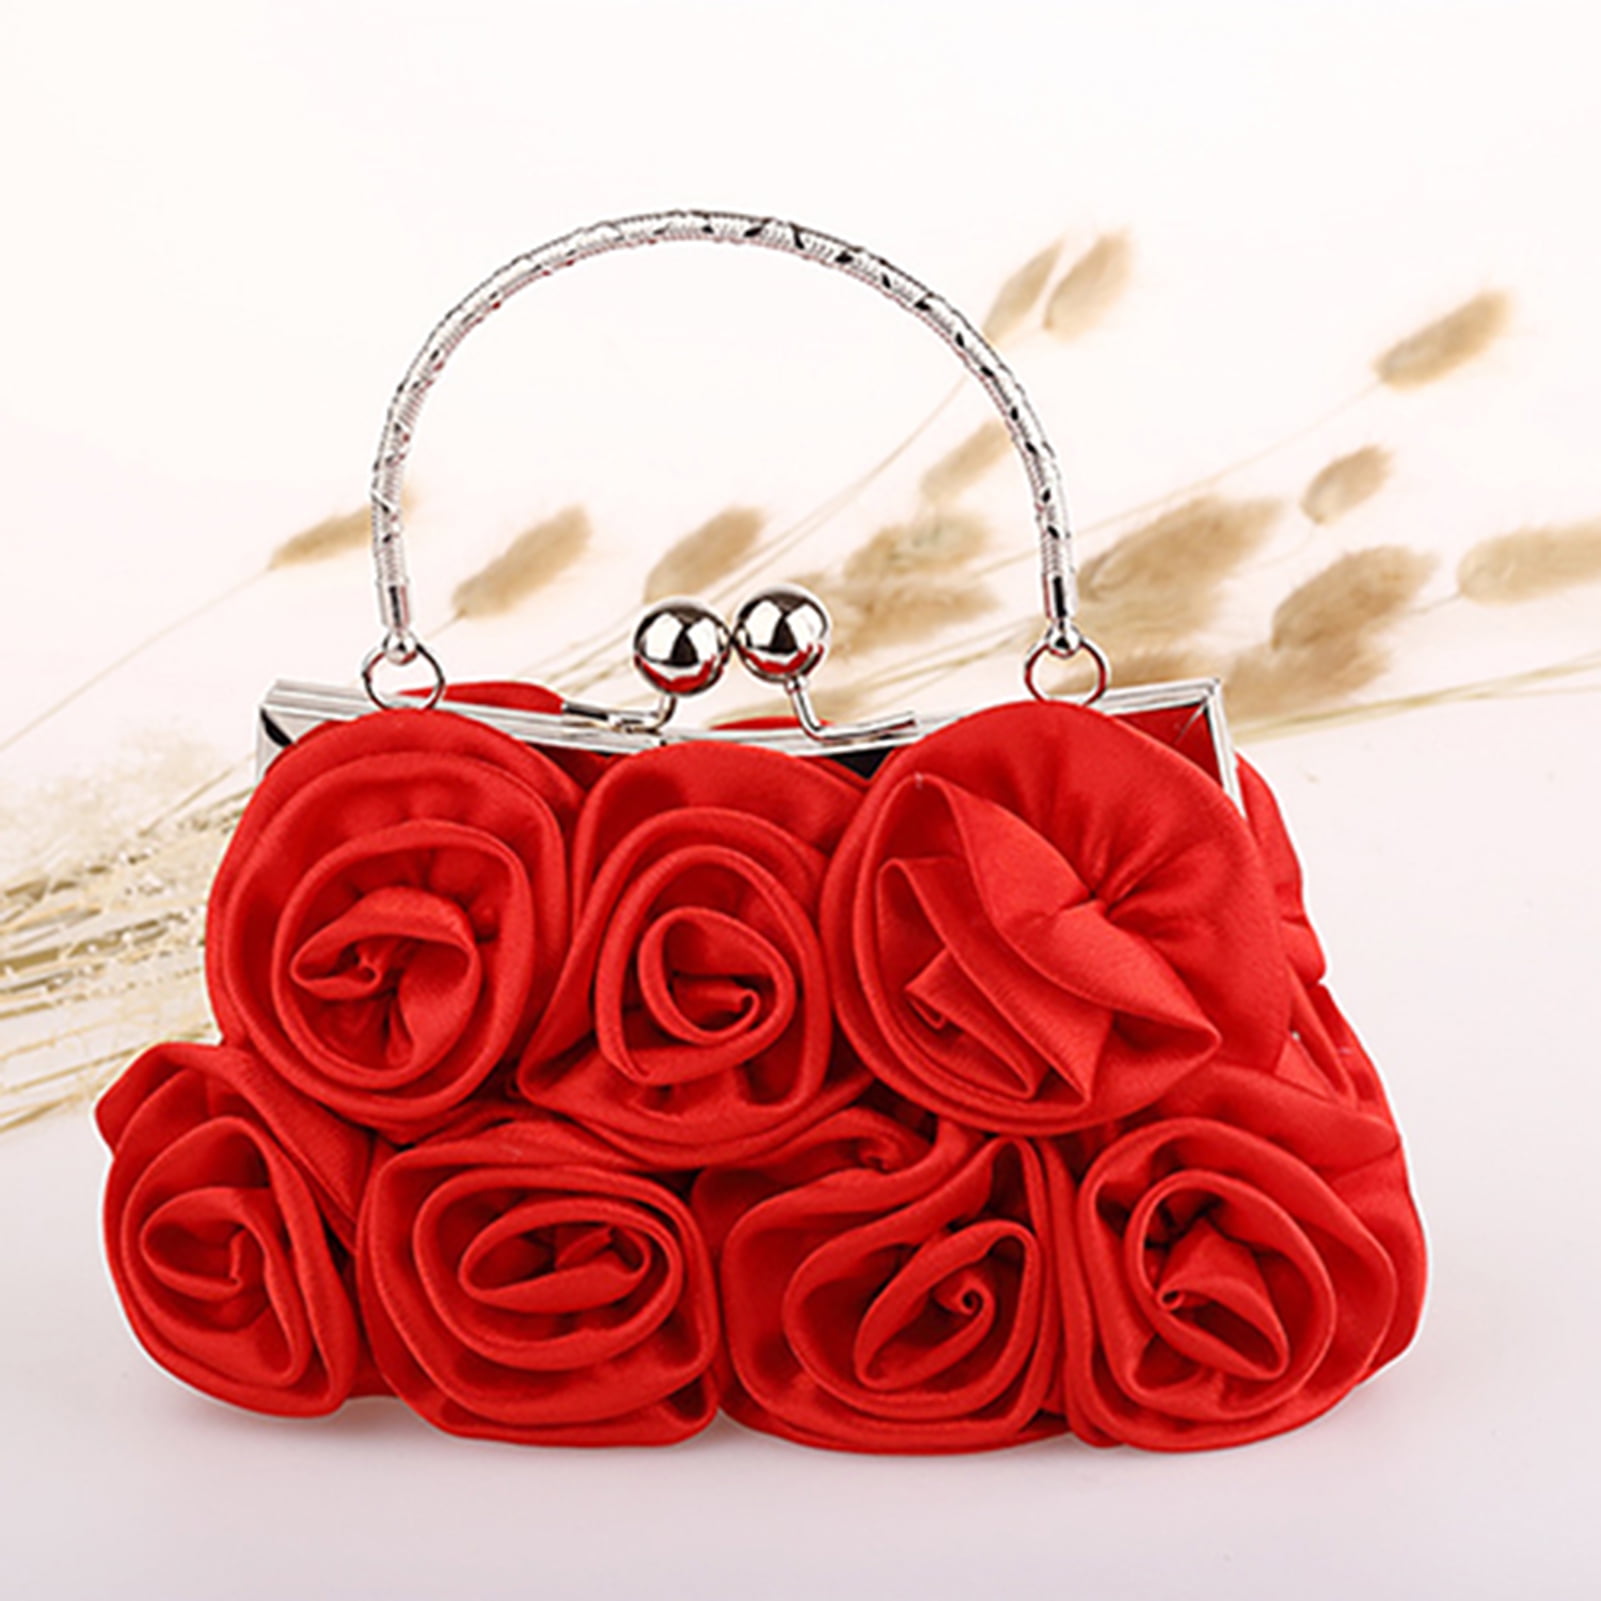 Women Evening Bag Silk-like Satin Rose Shaped Clutch Handbag With